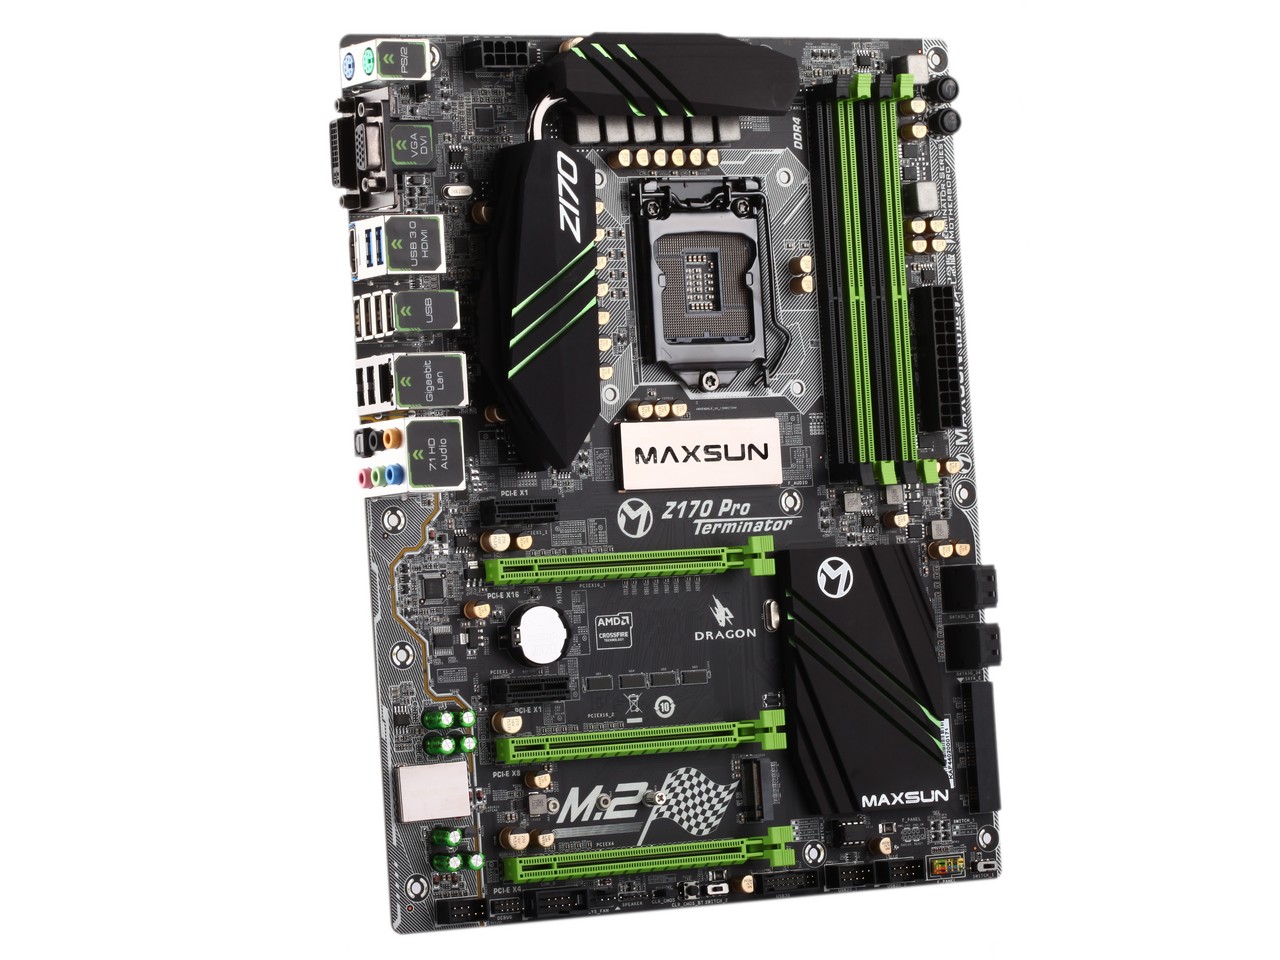 Maxsun MS-Z170 Pro Terminator - Motherboard Specifications On 